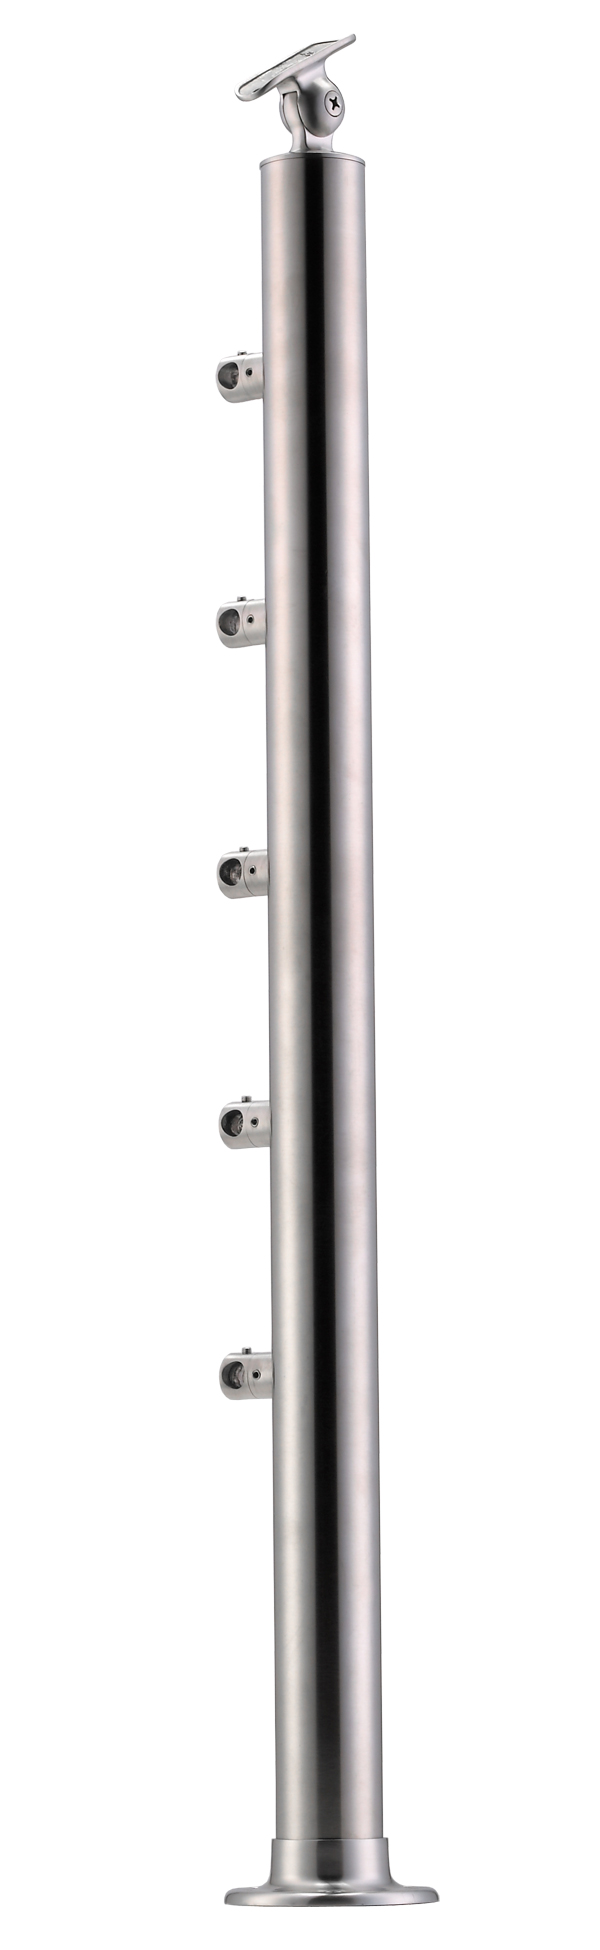 Poteaux de balustrade en acier inoxydable - tubulaires - SS:2020556A